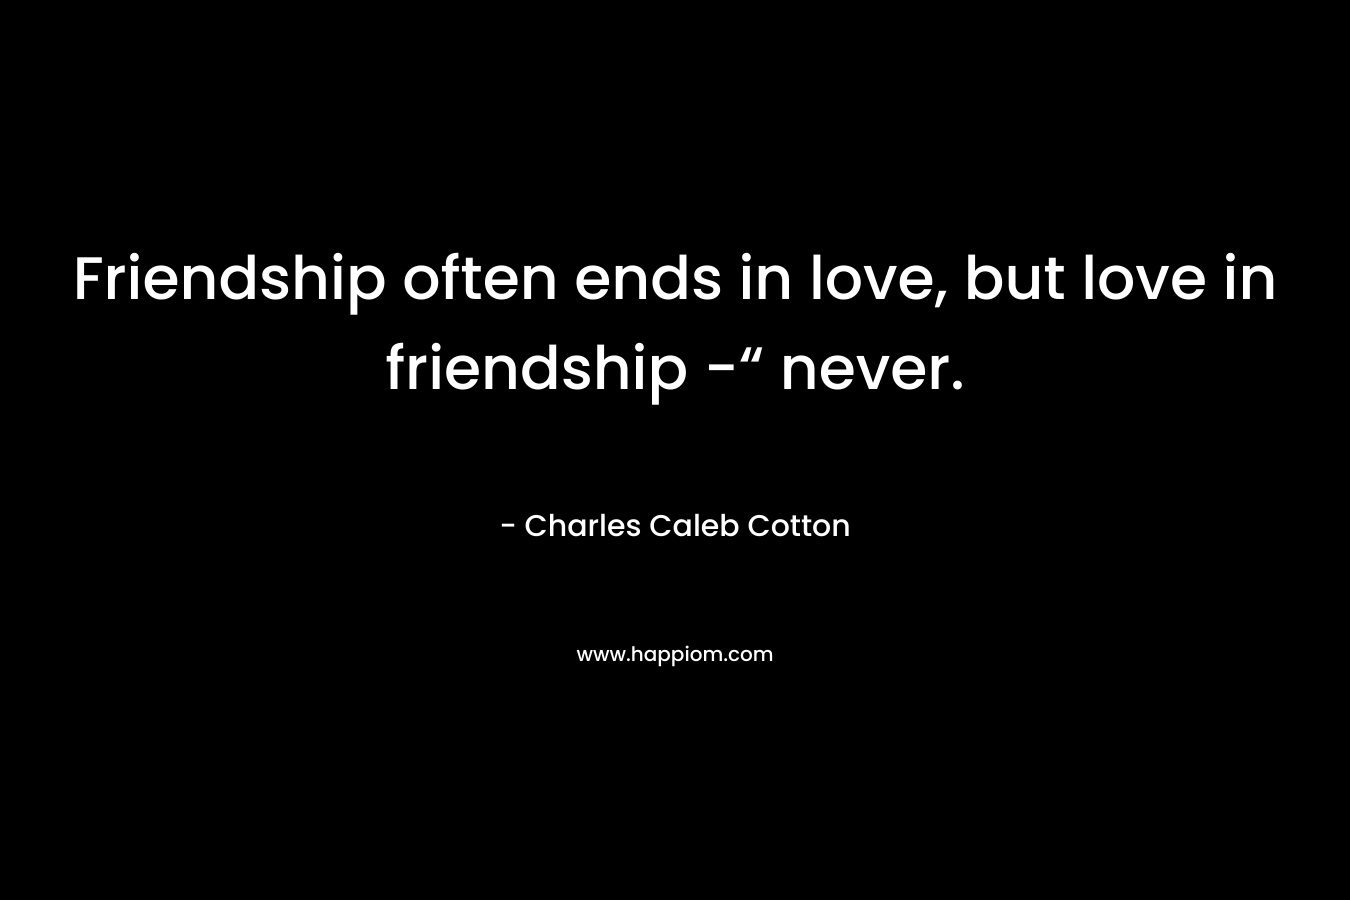 Friendship often ends in love, but love in friendship -“ never.